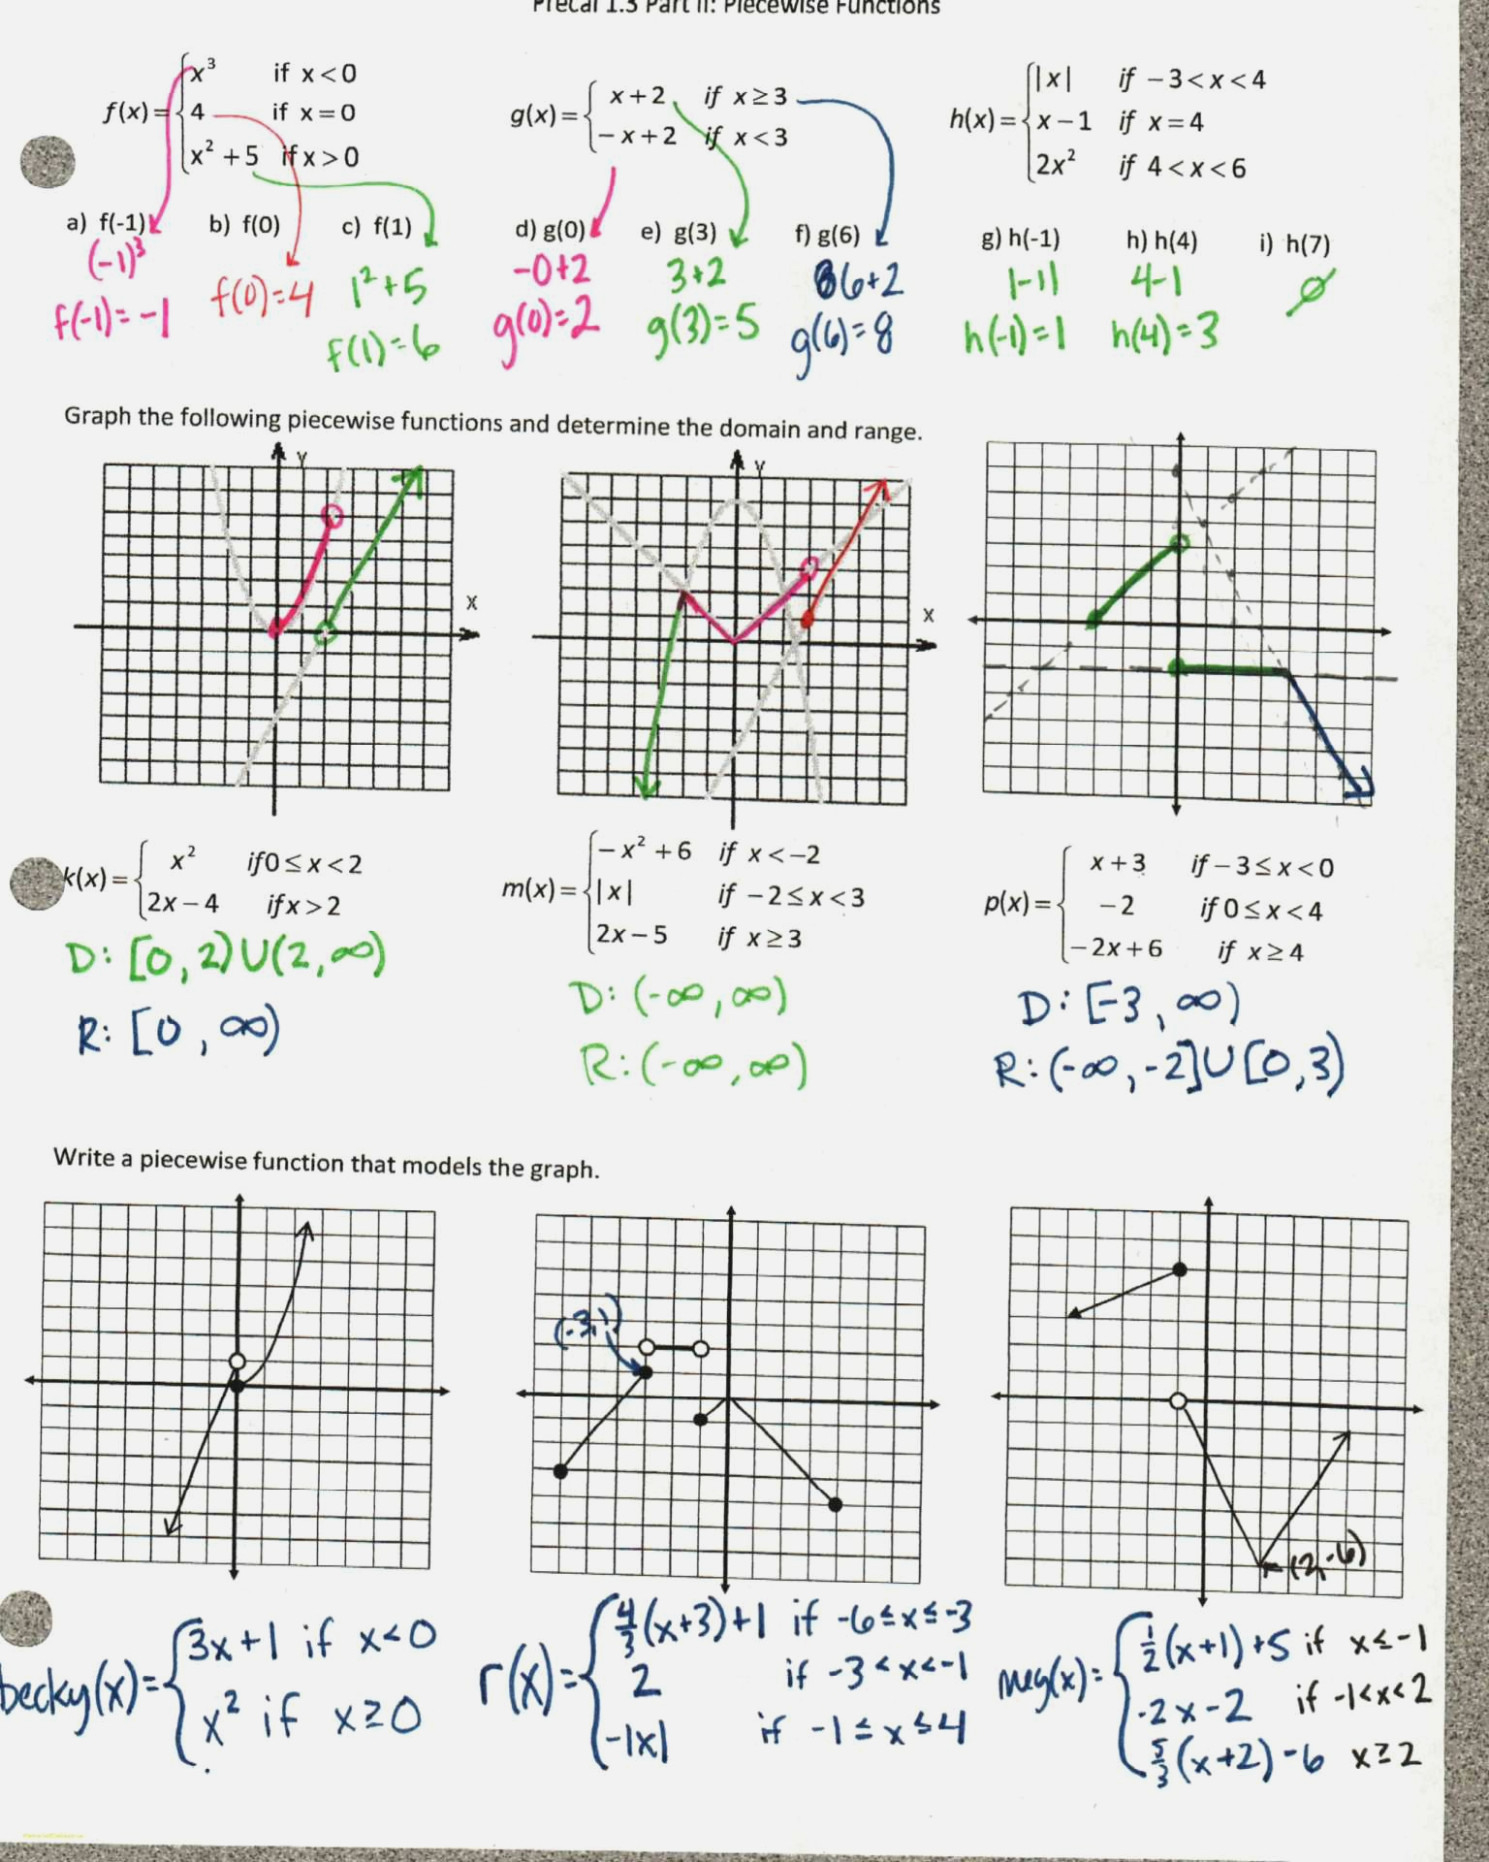 Practice Worksheet Graphing Quadratic Functions In Standard